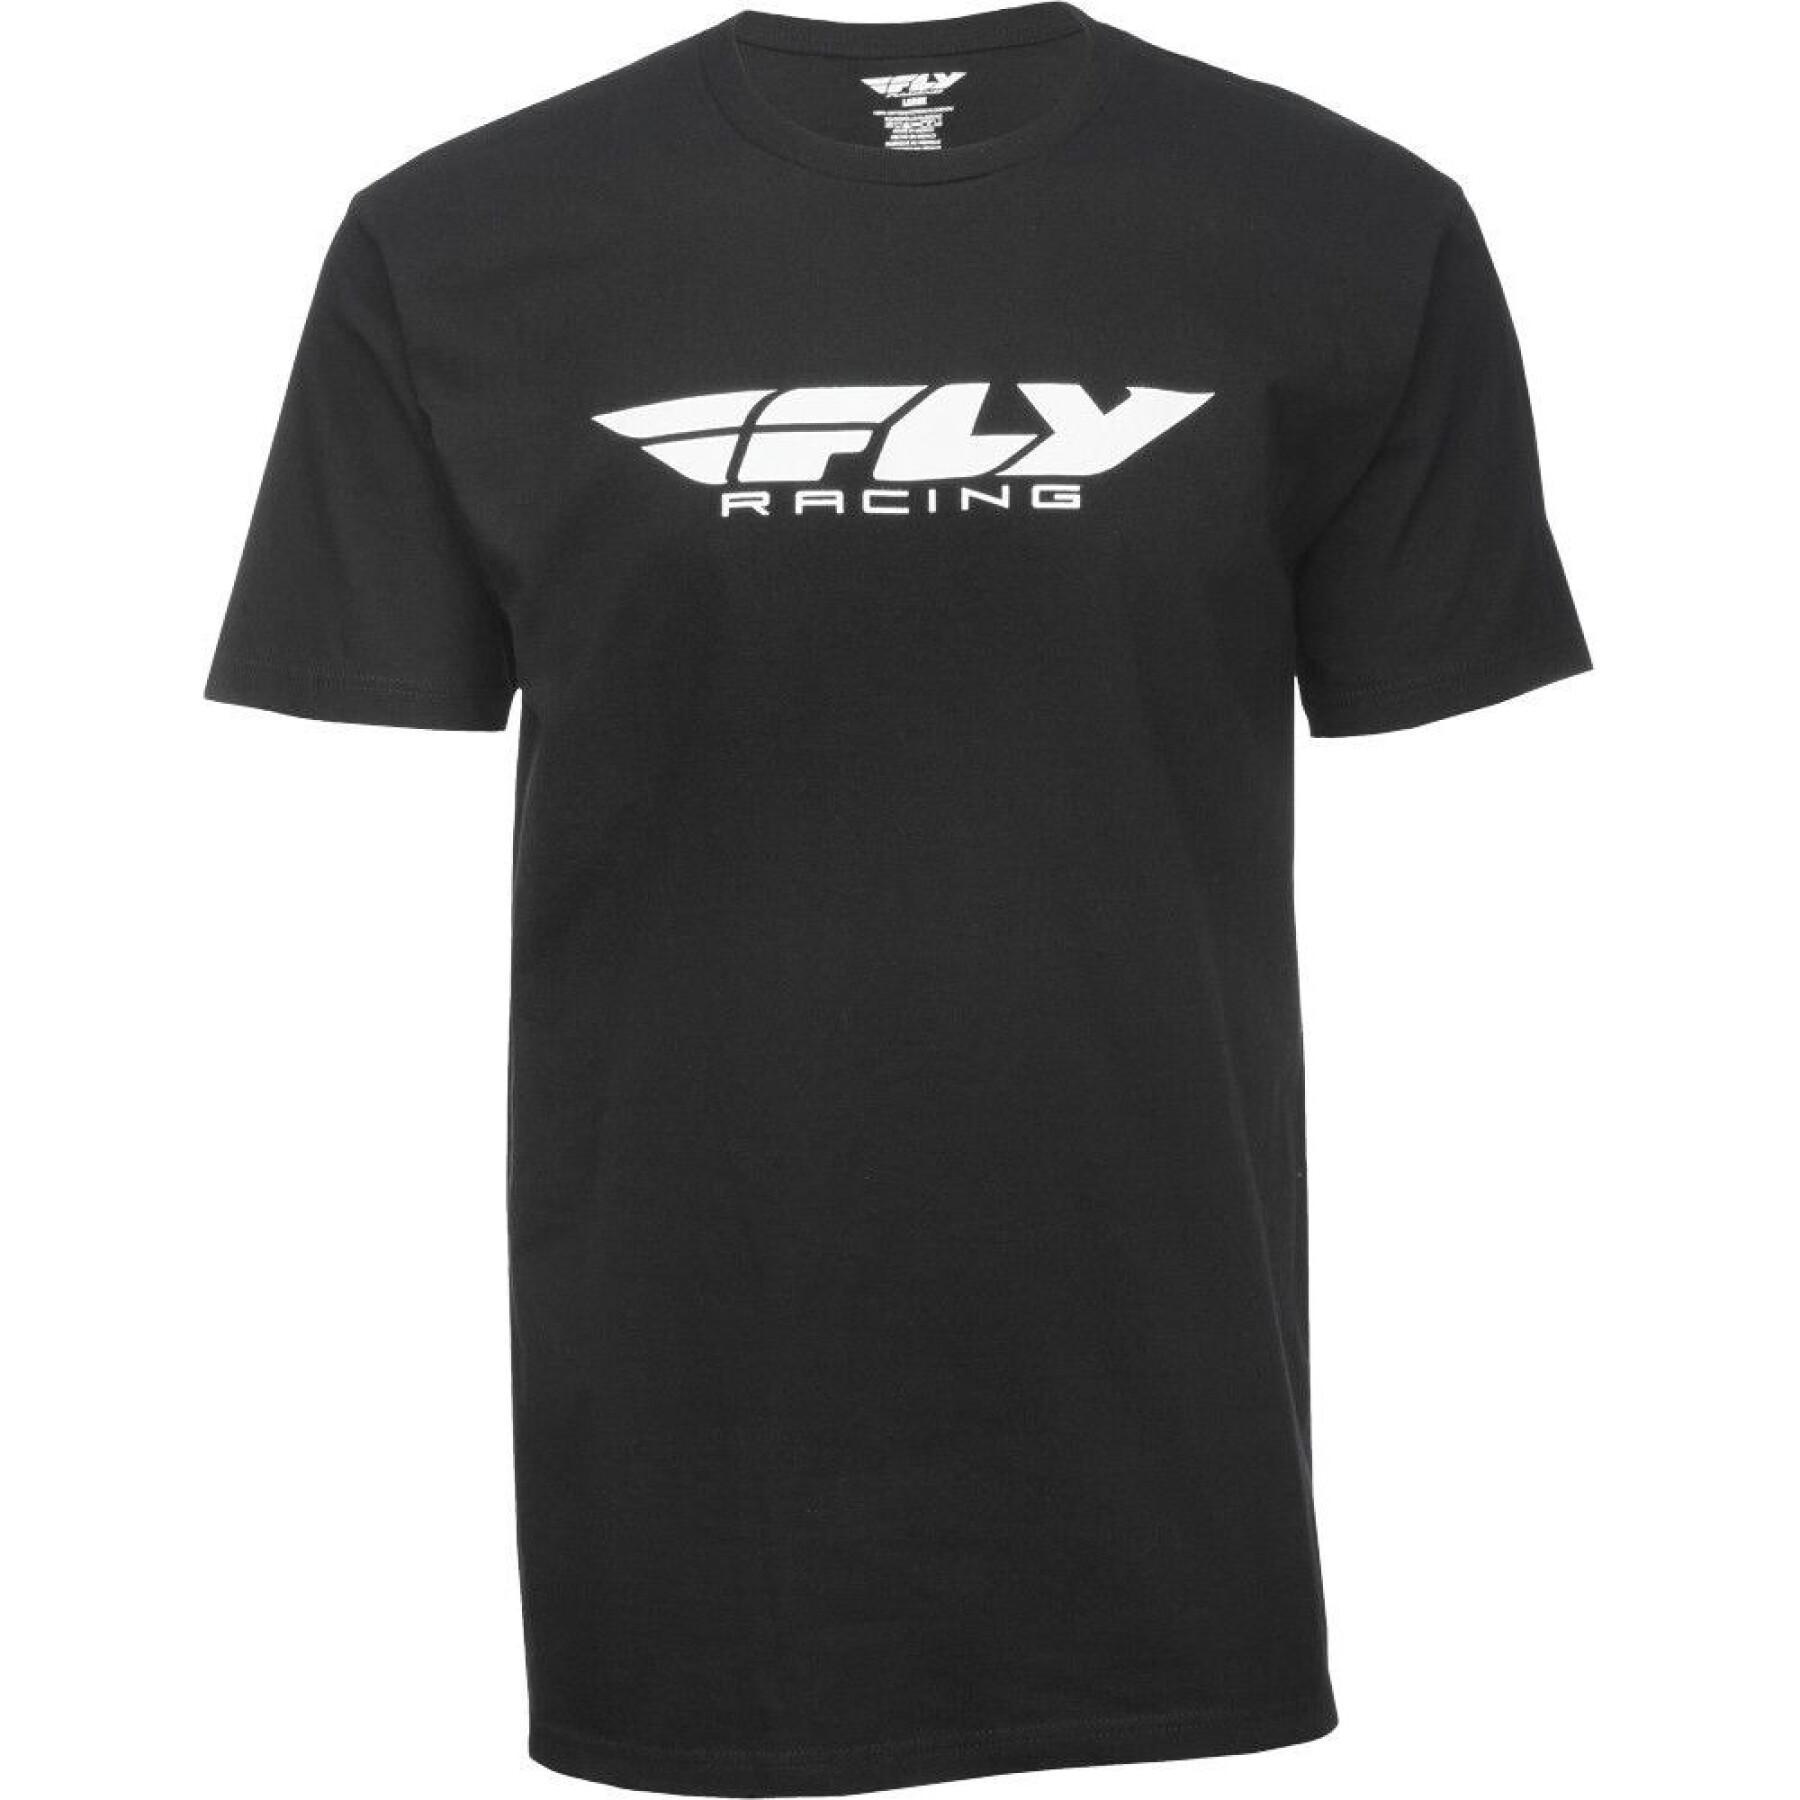 Kinder-T-shirt Fly Racing Corporate